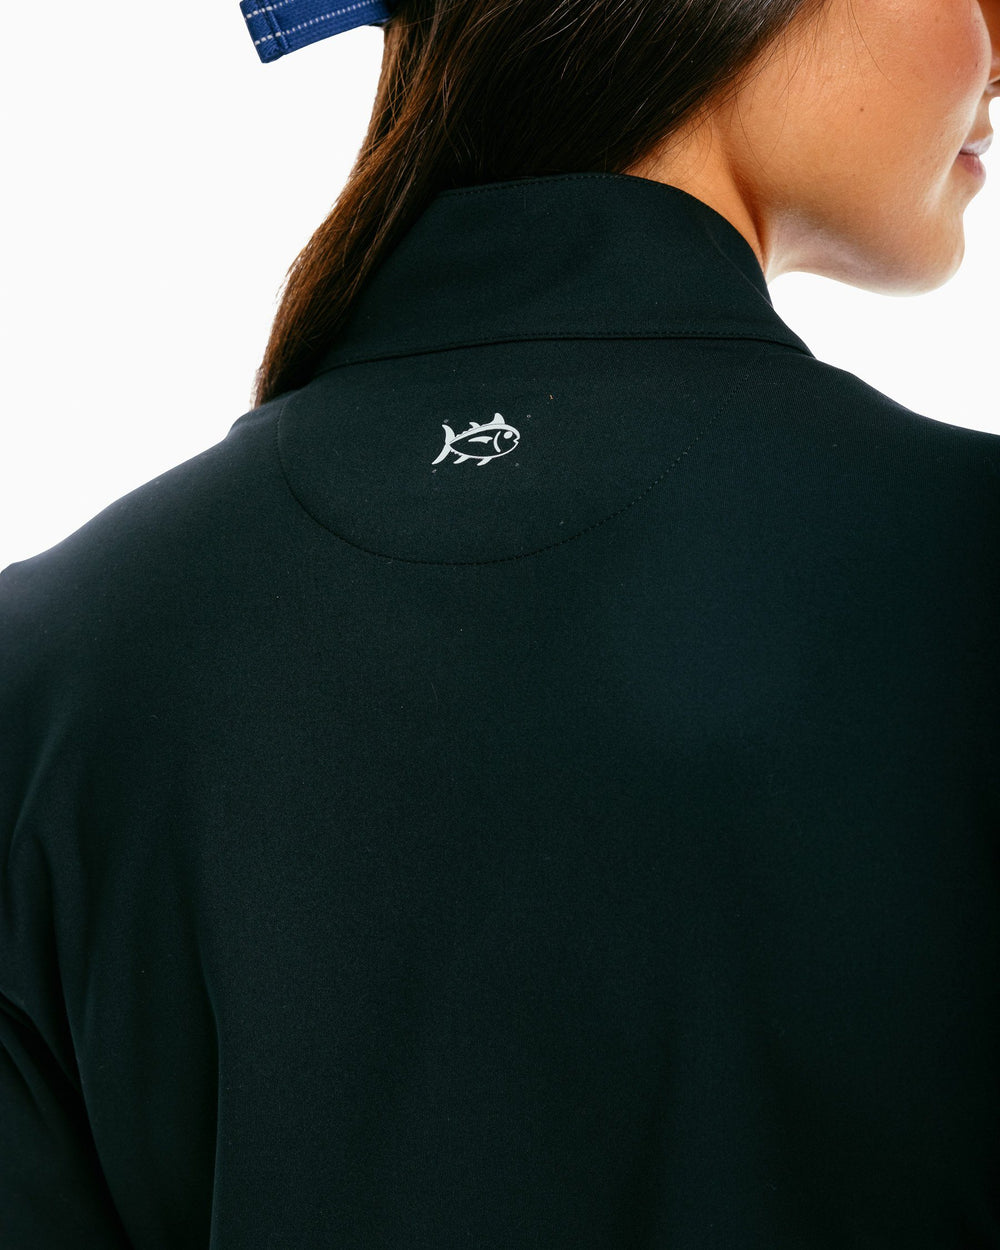 The back detail of the Women's Josette Mixed Media Full Zip Athletic Jacket - Black